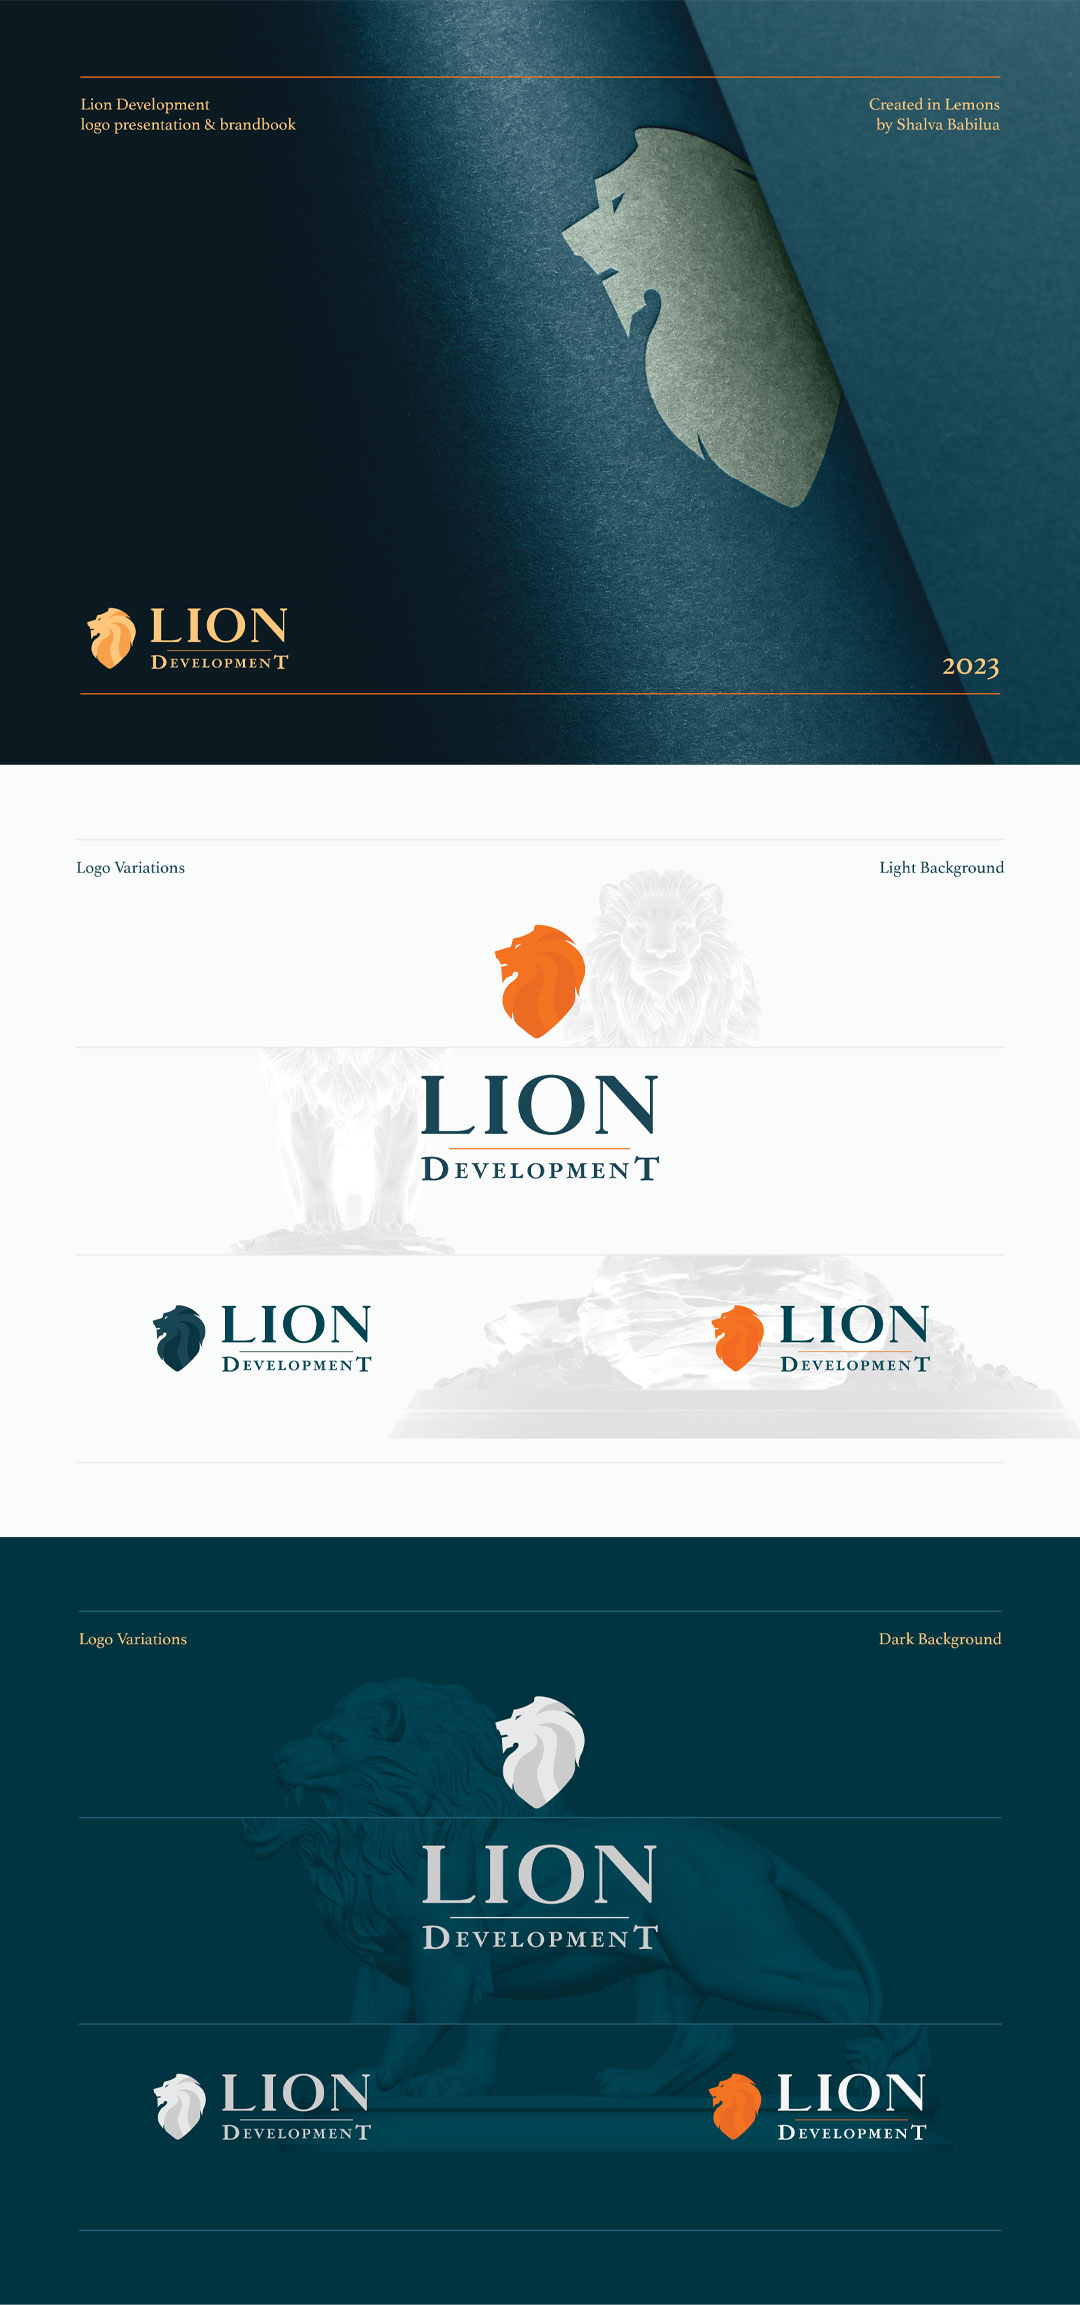 Lion Development